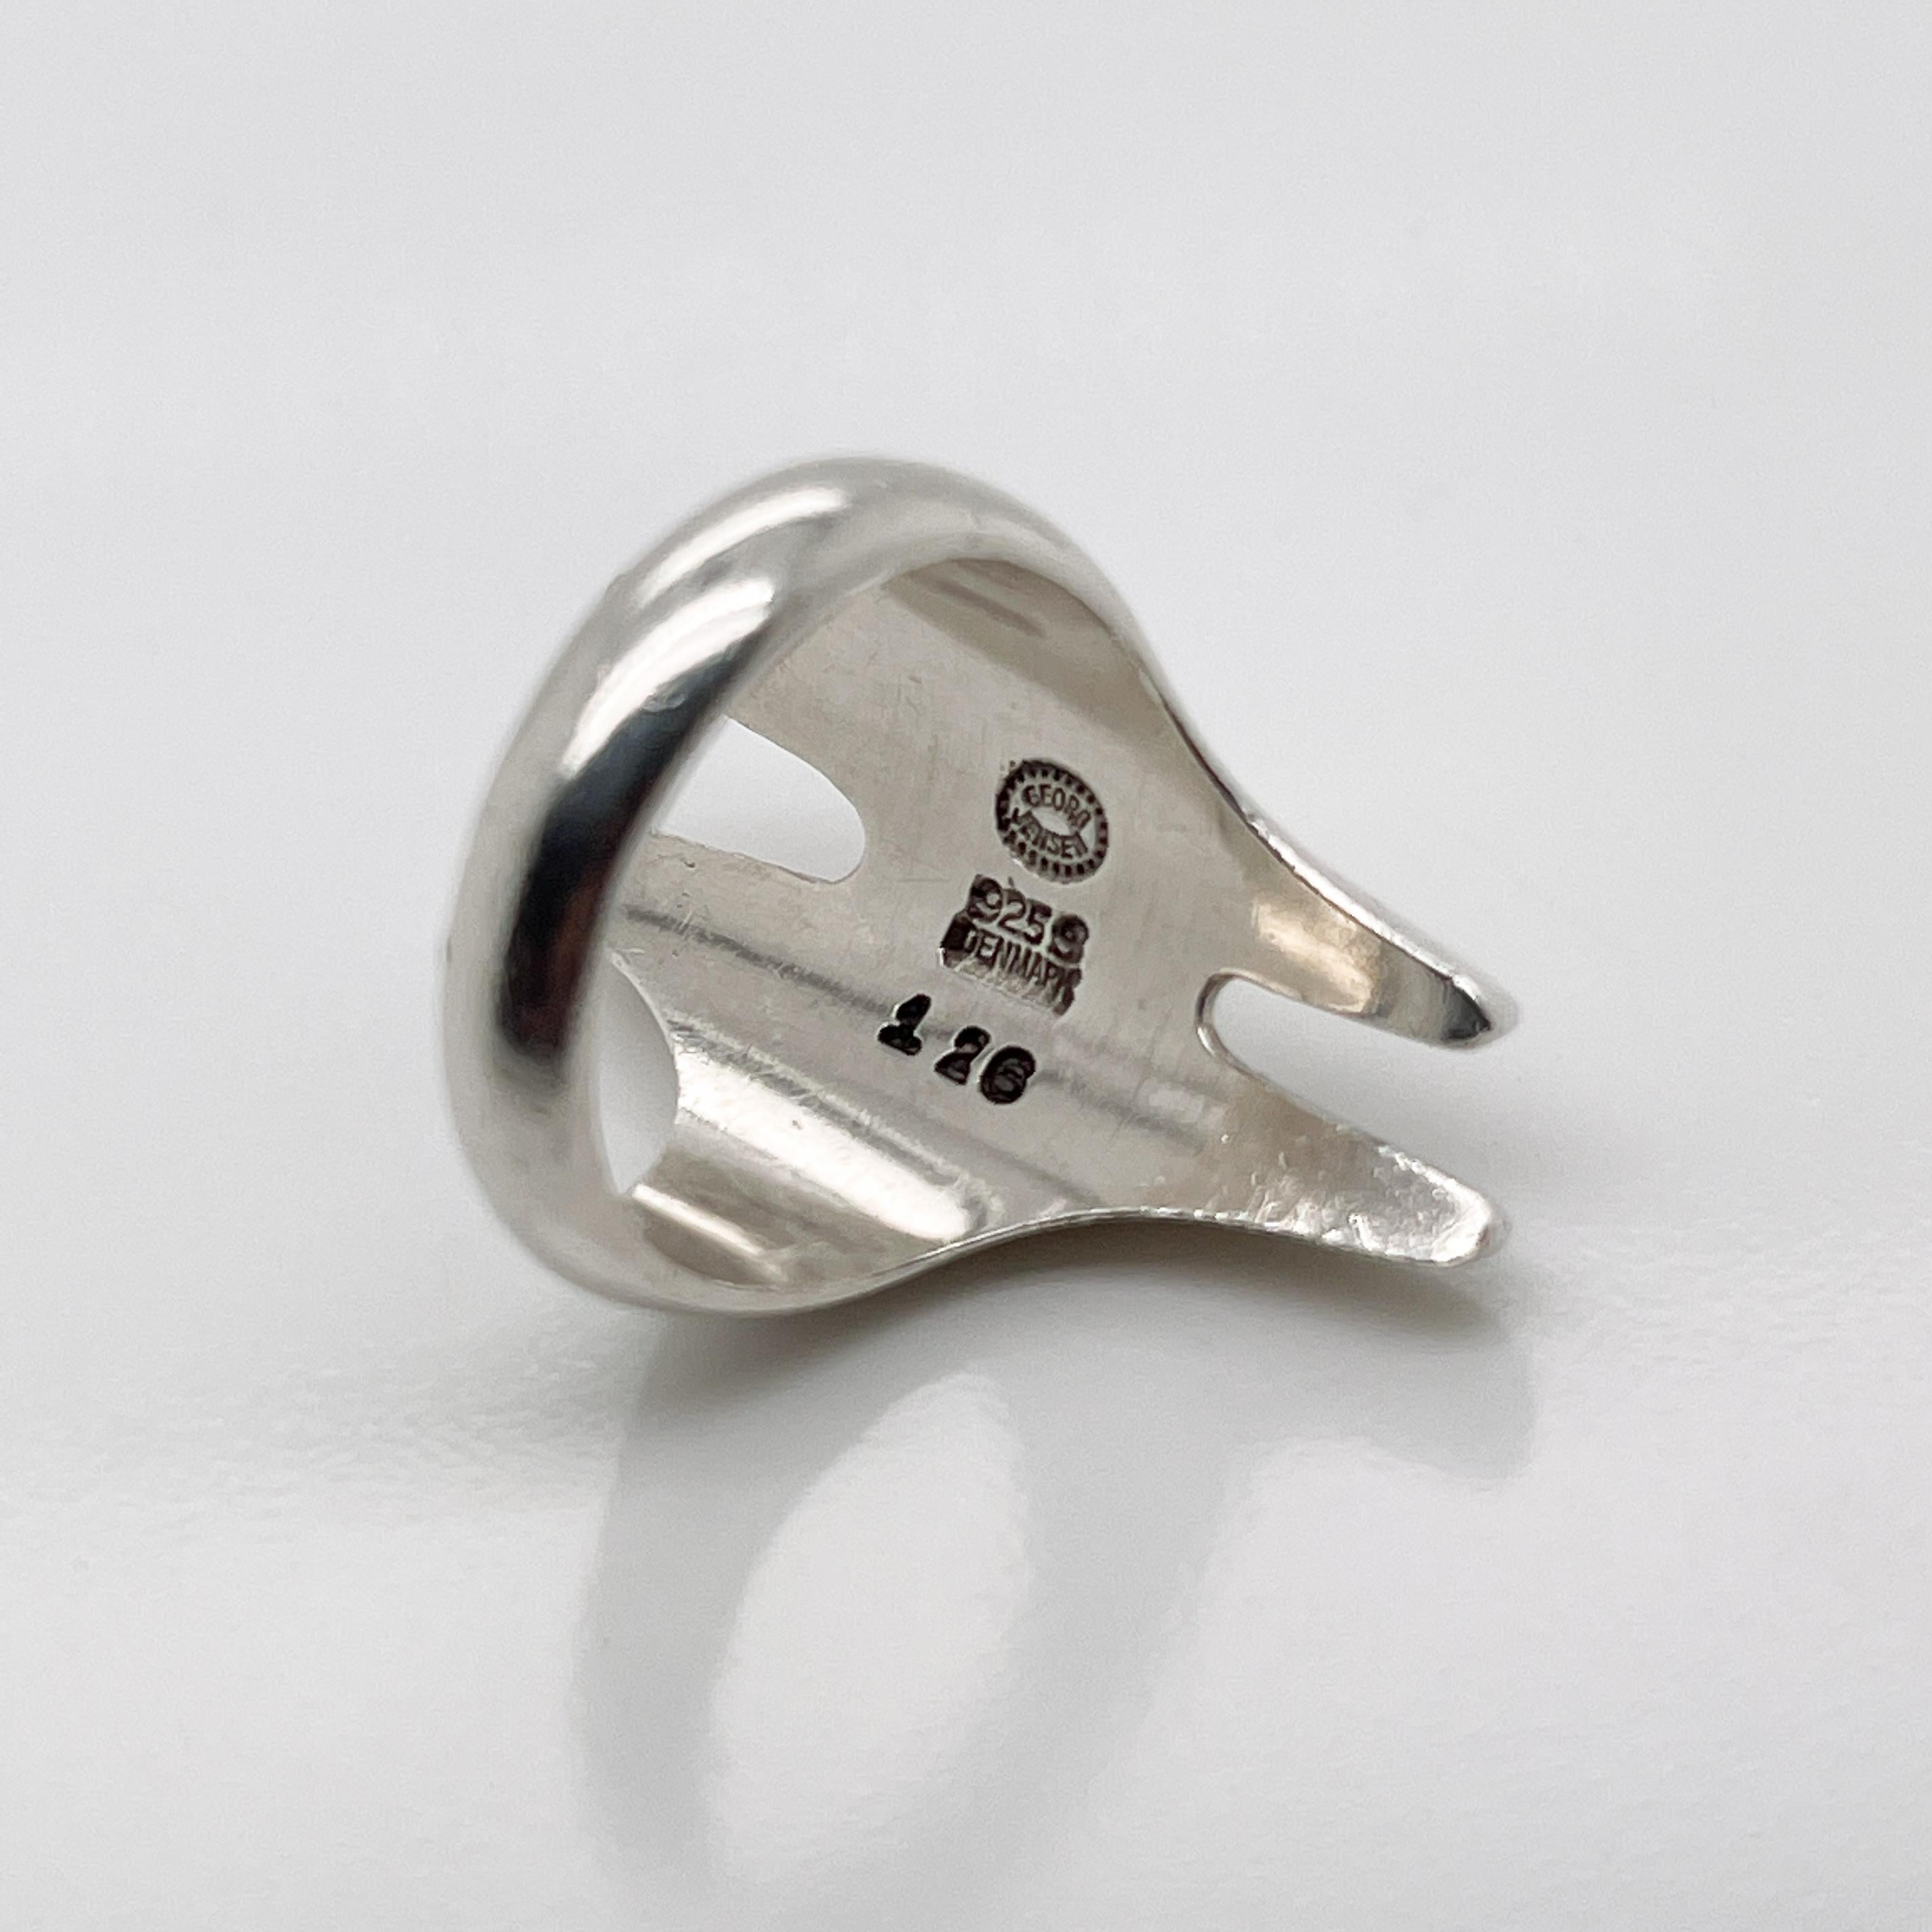 Modernist Georg Jensen Sterling Silver Ring No. 126 by Henning Koppel For Sale 1